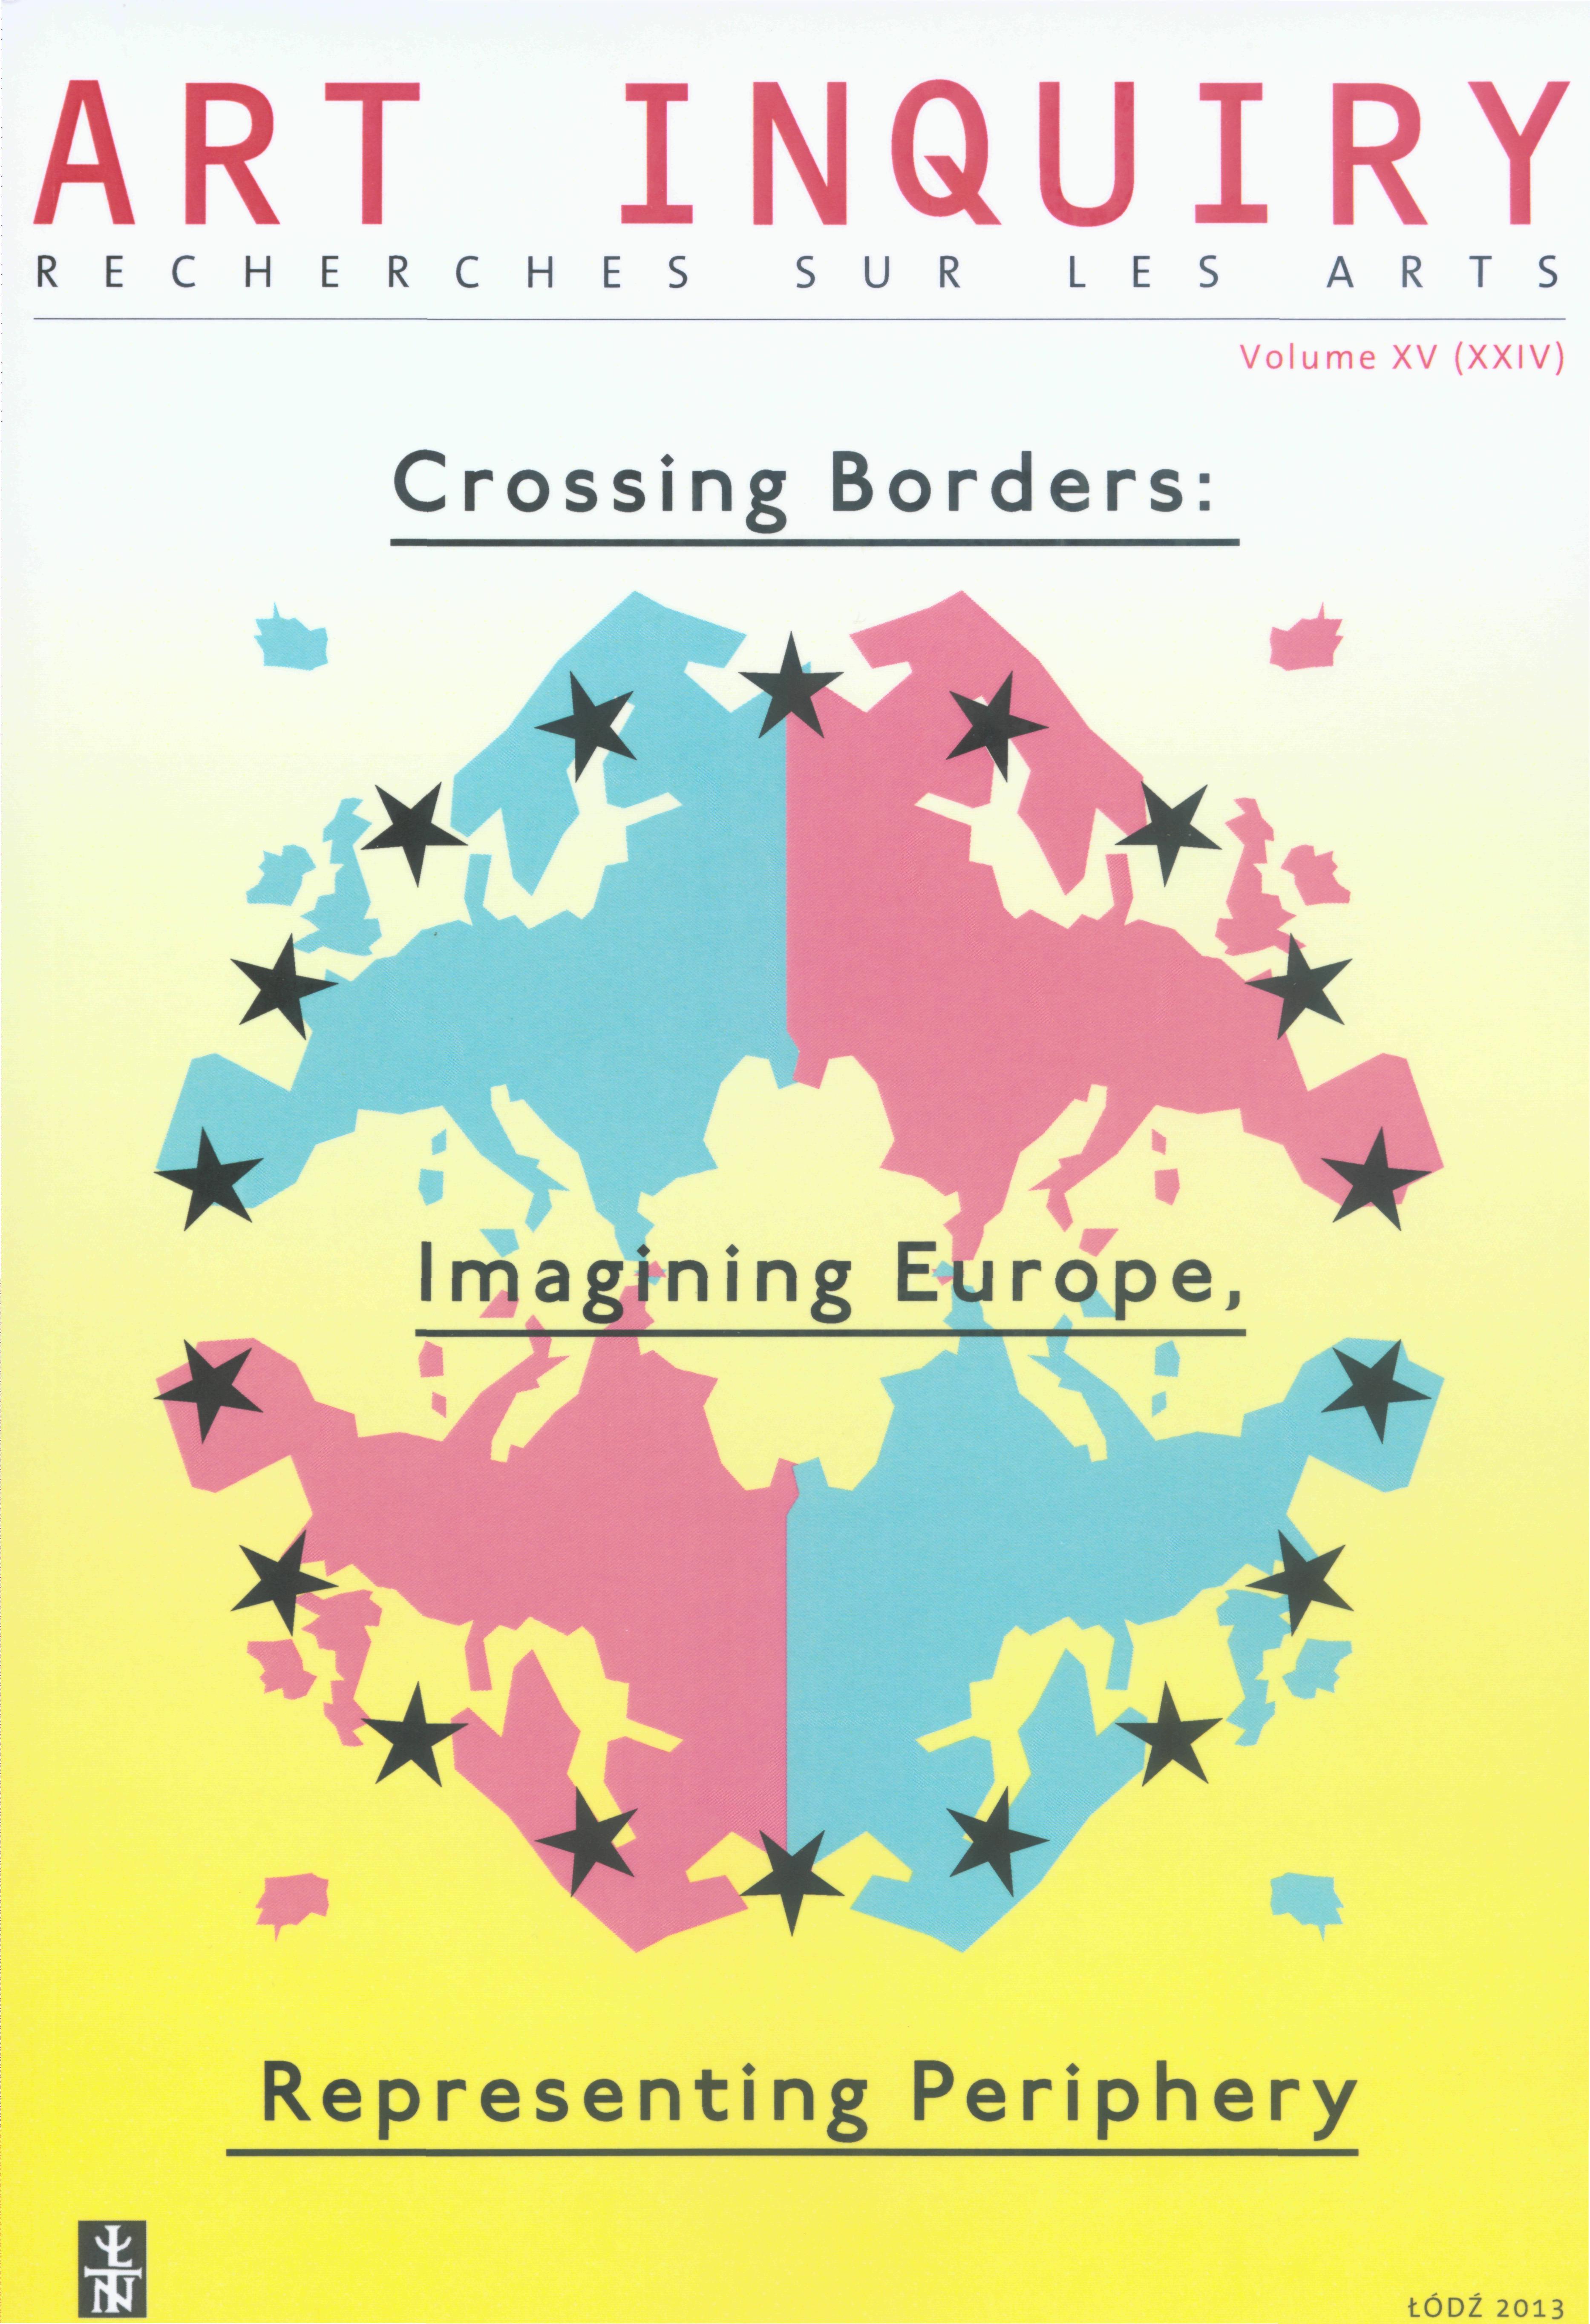 					Pokaż  Tom 15 (2013): Crossing borders: imagining Europe, representing periphery
				